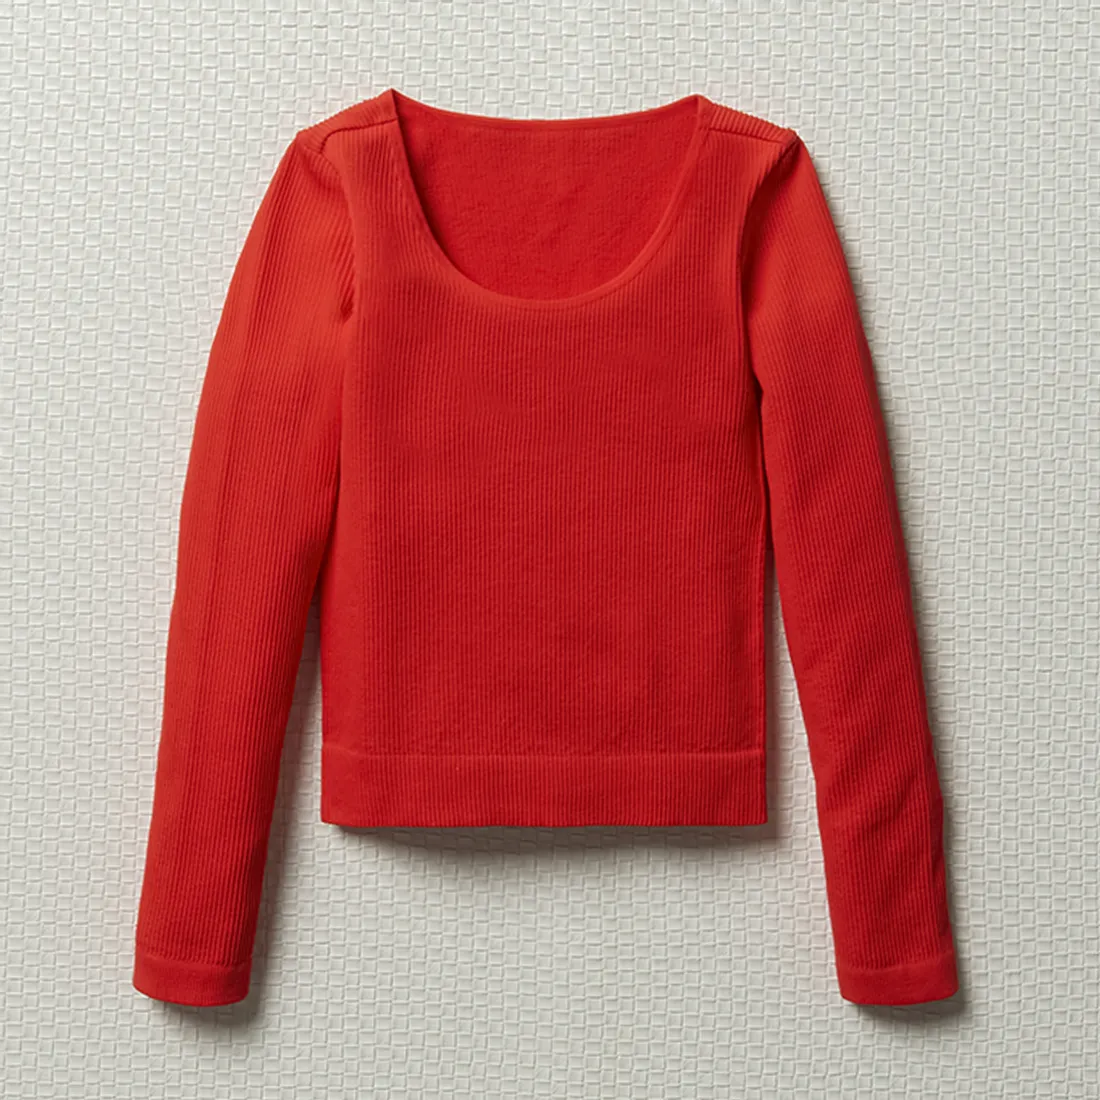 Long sleeve seamfree t-shirt red - GIRLS 7-15 YEARS Tops & T-Shirts ...